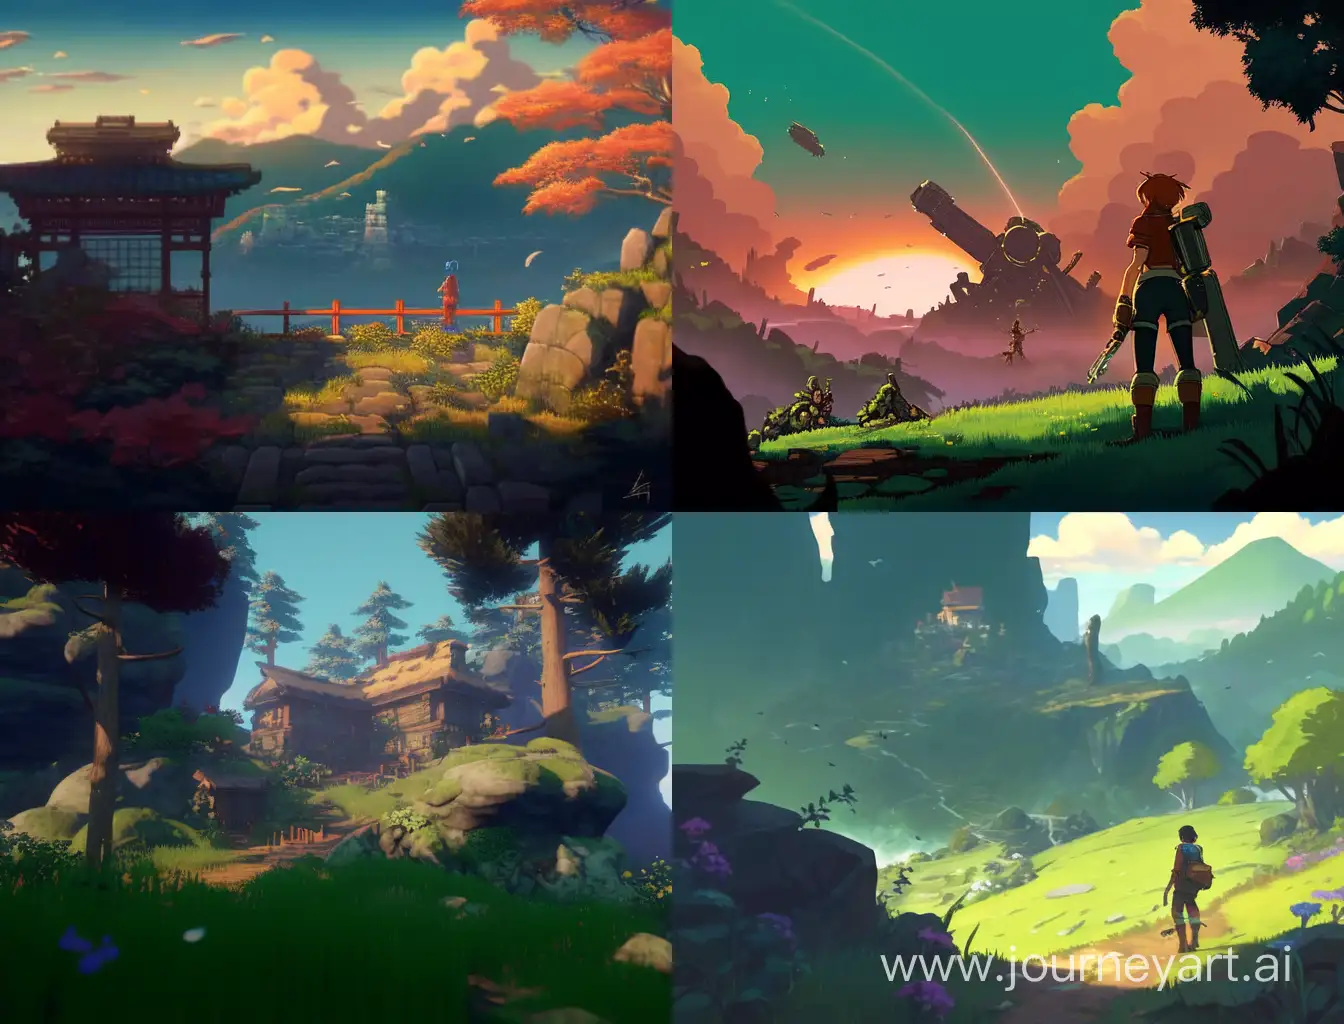 Rust-Video-Game-in-Studio-Ghibli-Art-Style-Enchanting-Niji-Landscape